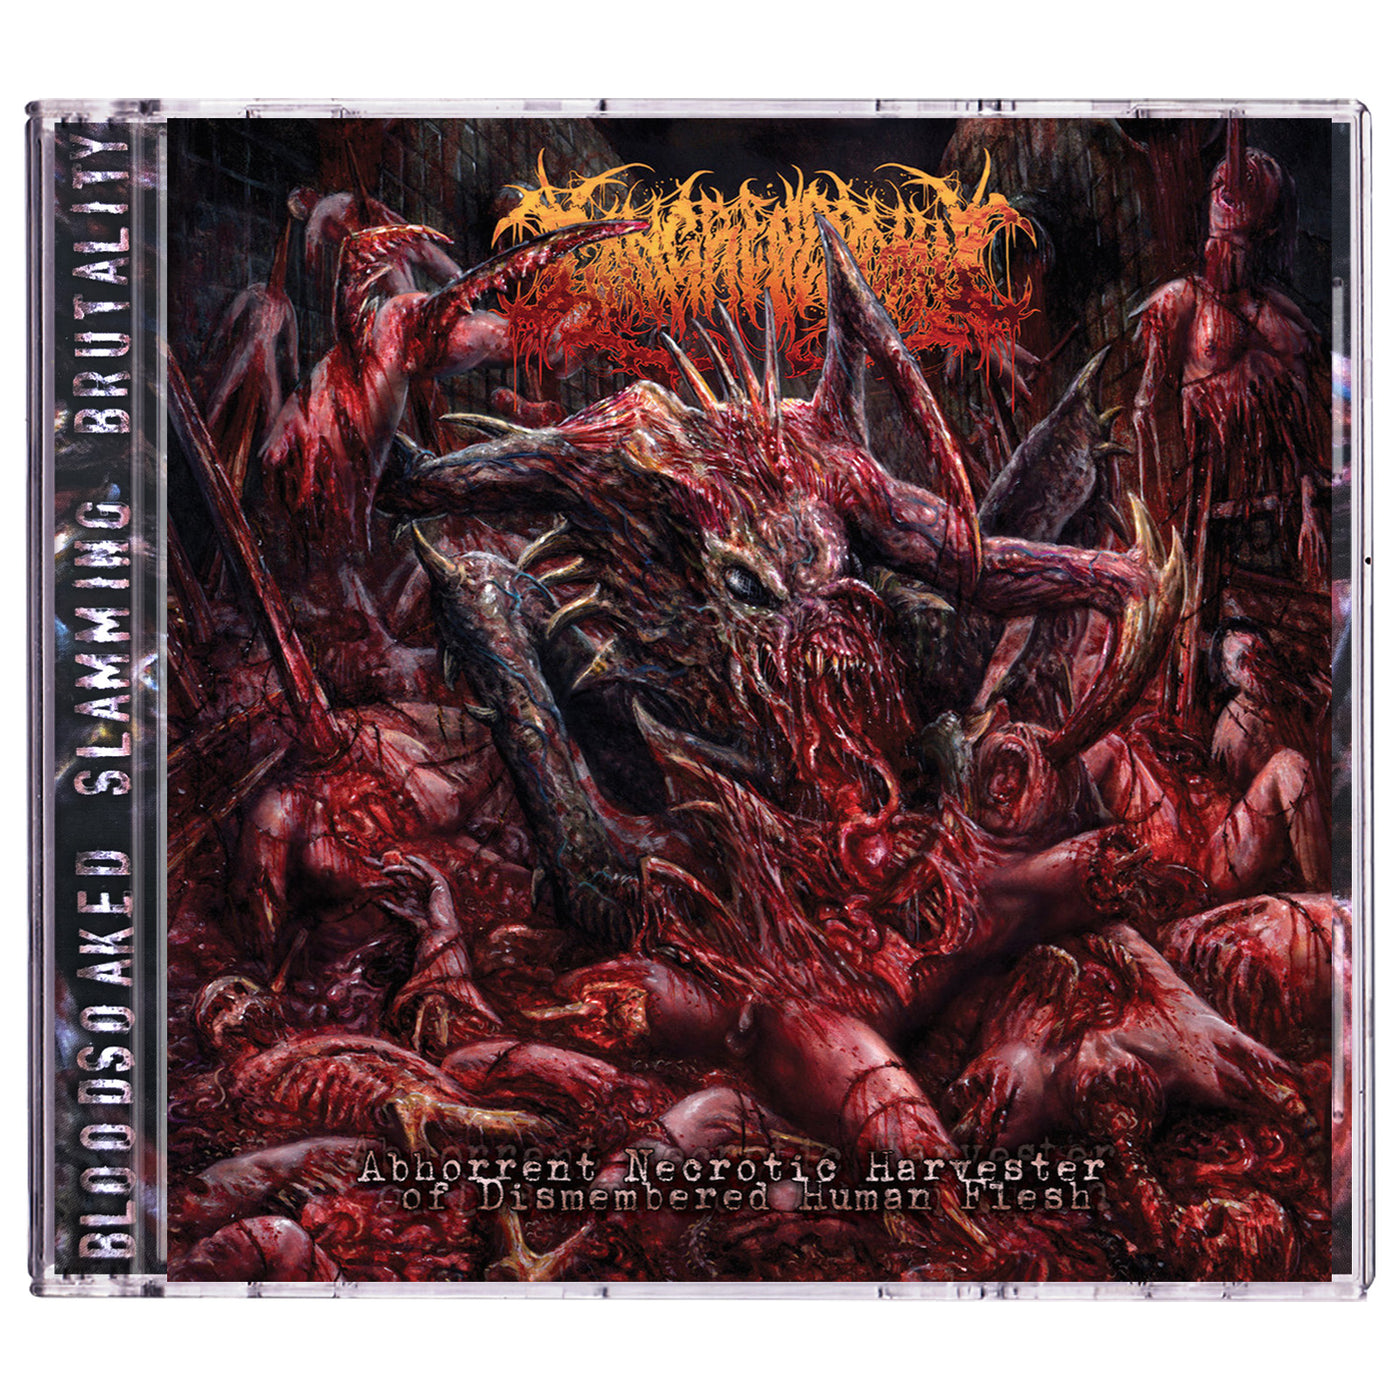 Gangrenectomy 'Abhorrent Necrotic Harvester of Dismembered Human Flesh' CD